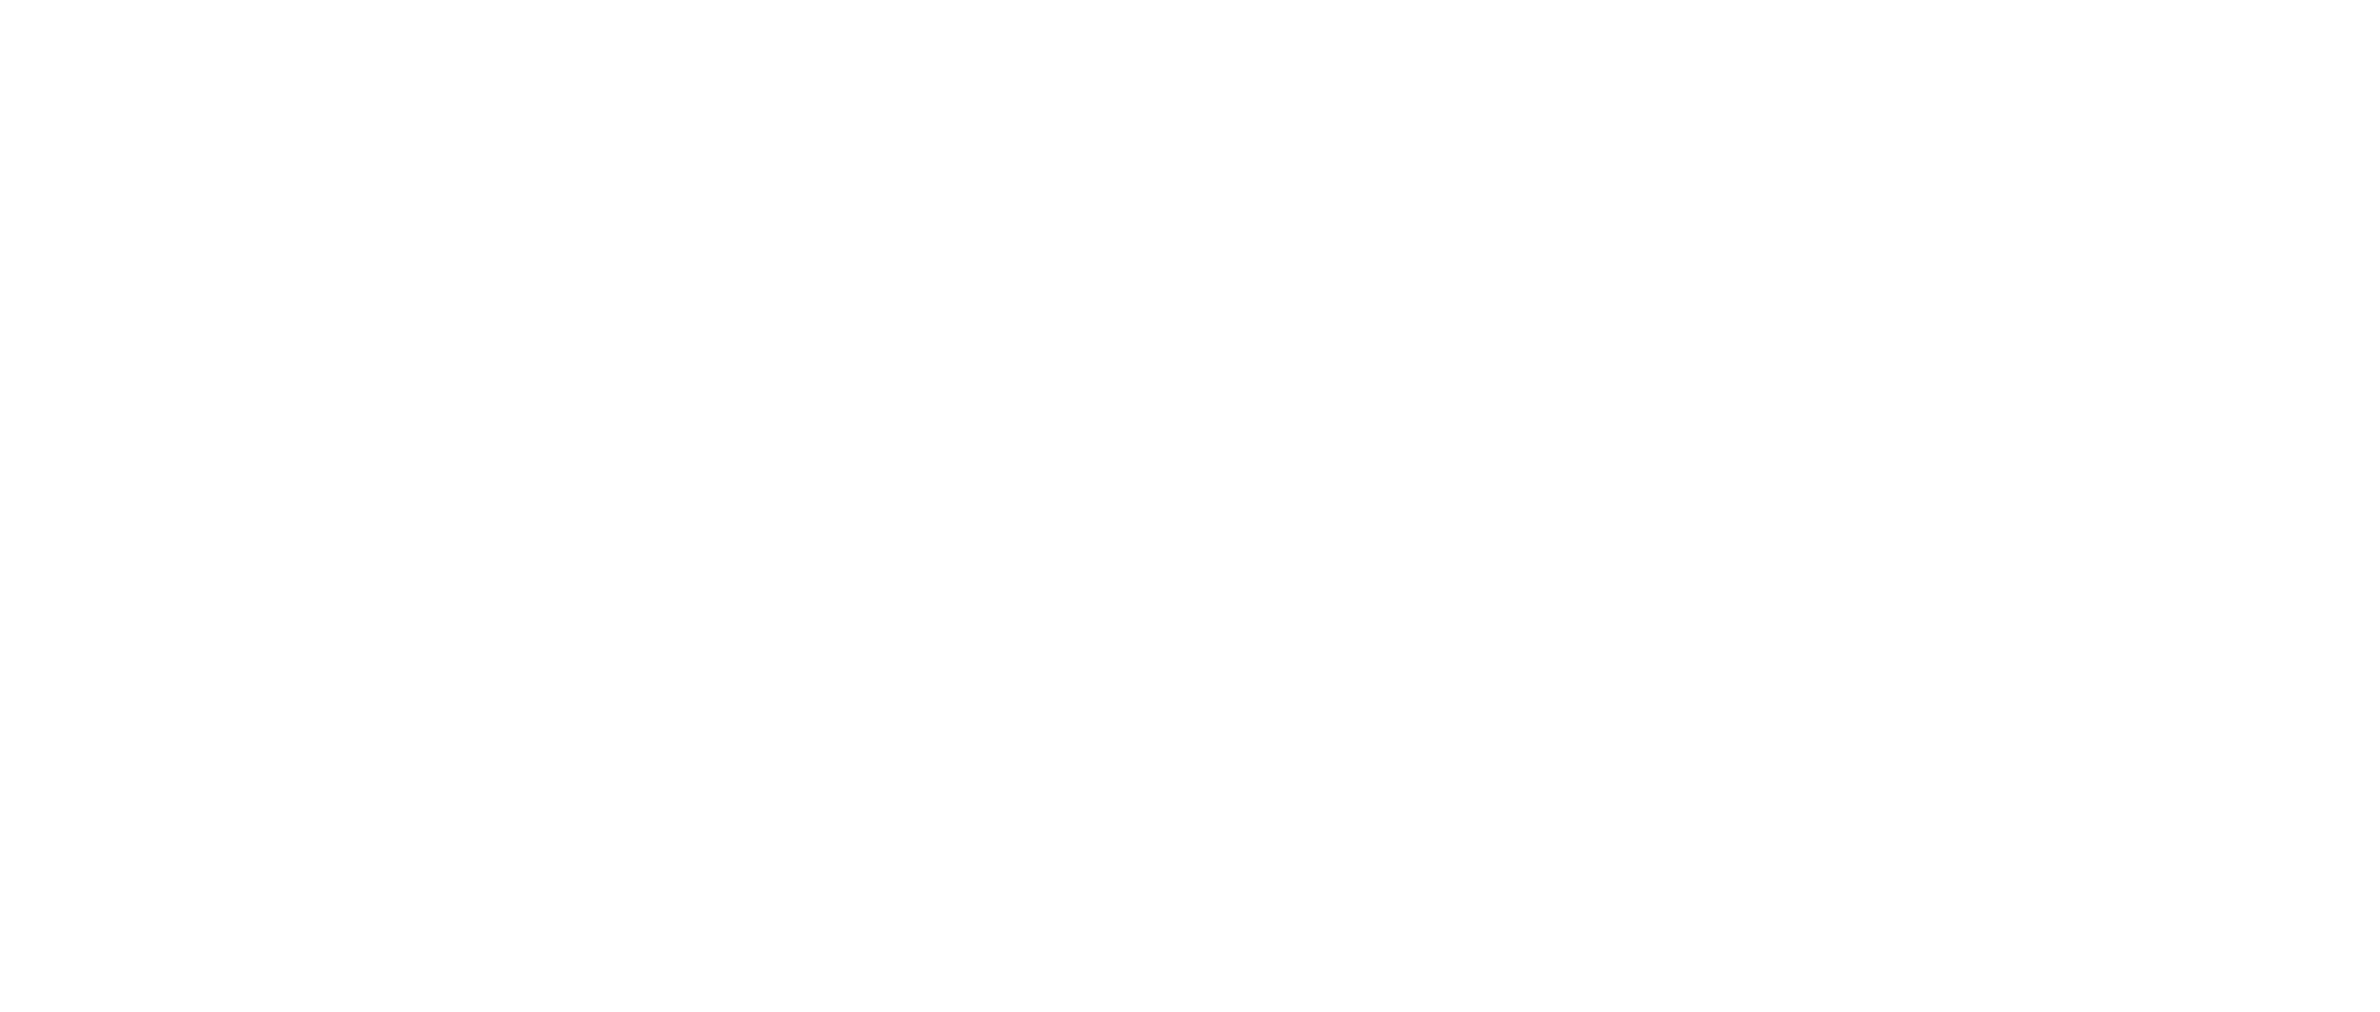 GIC global infrastructure consultants logo ג'י איי סי לוגו